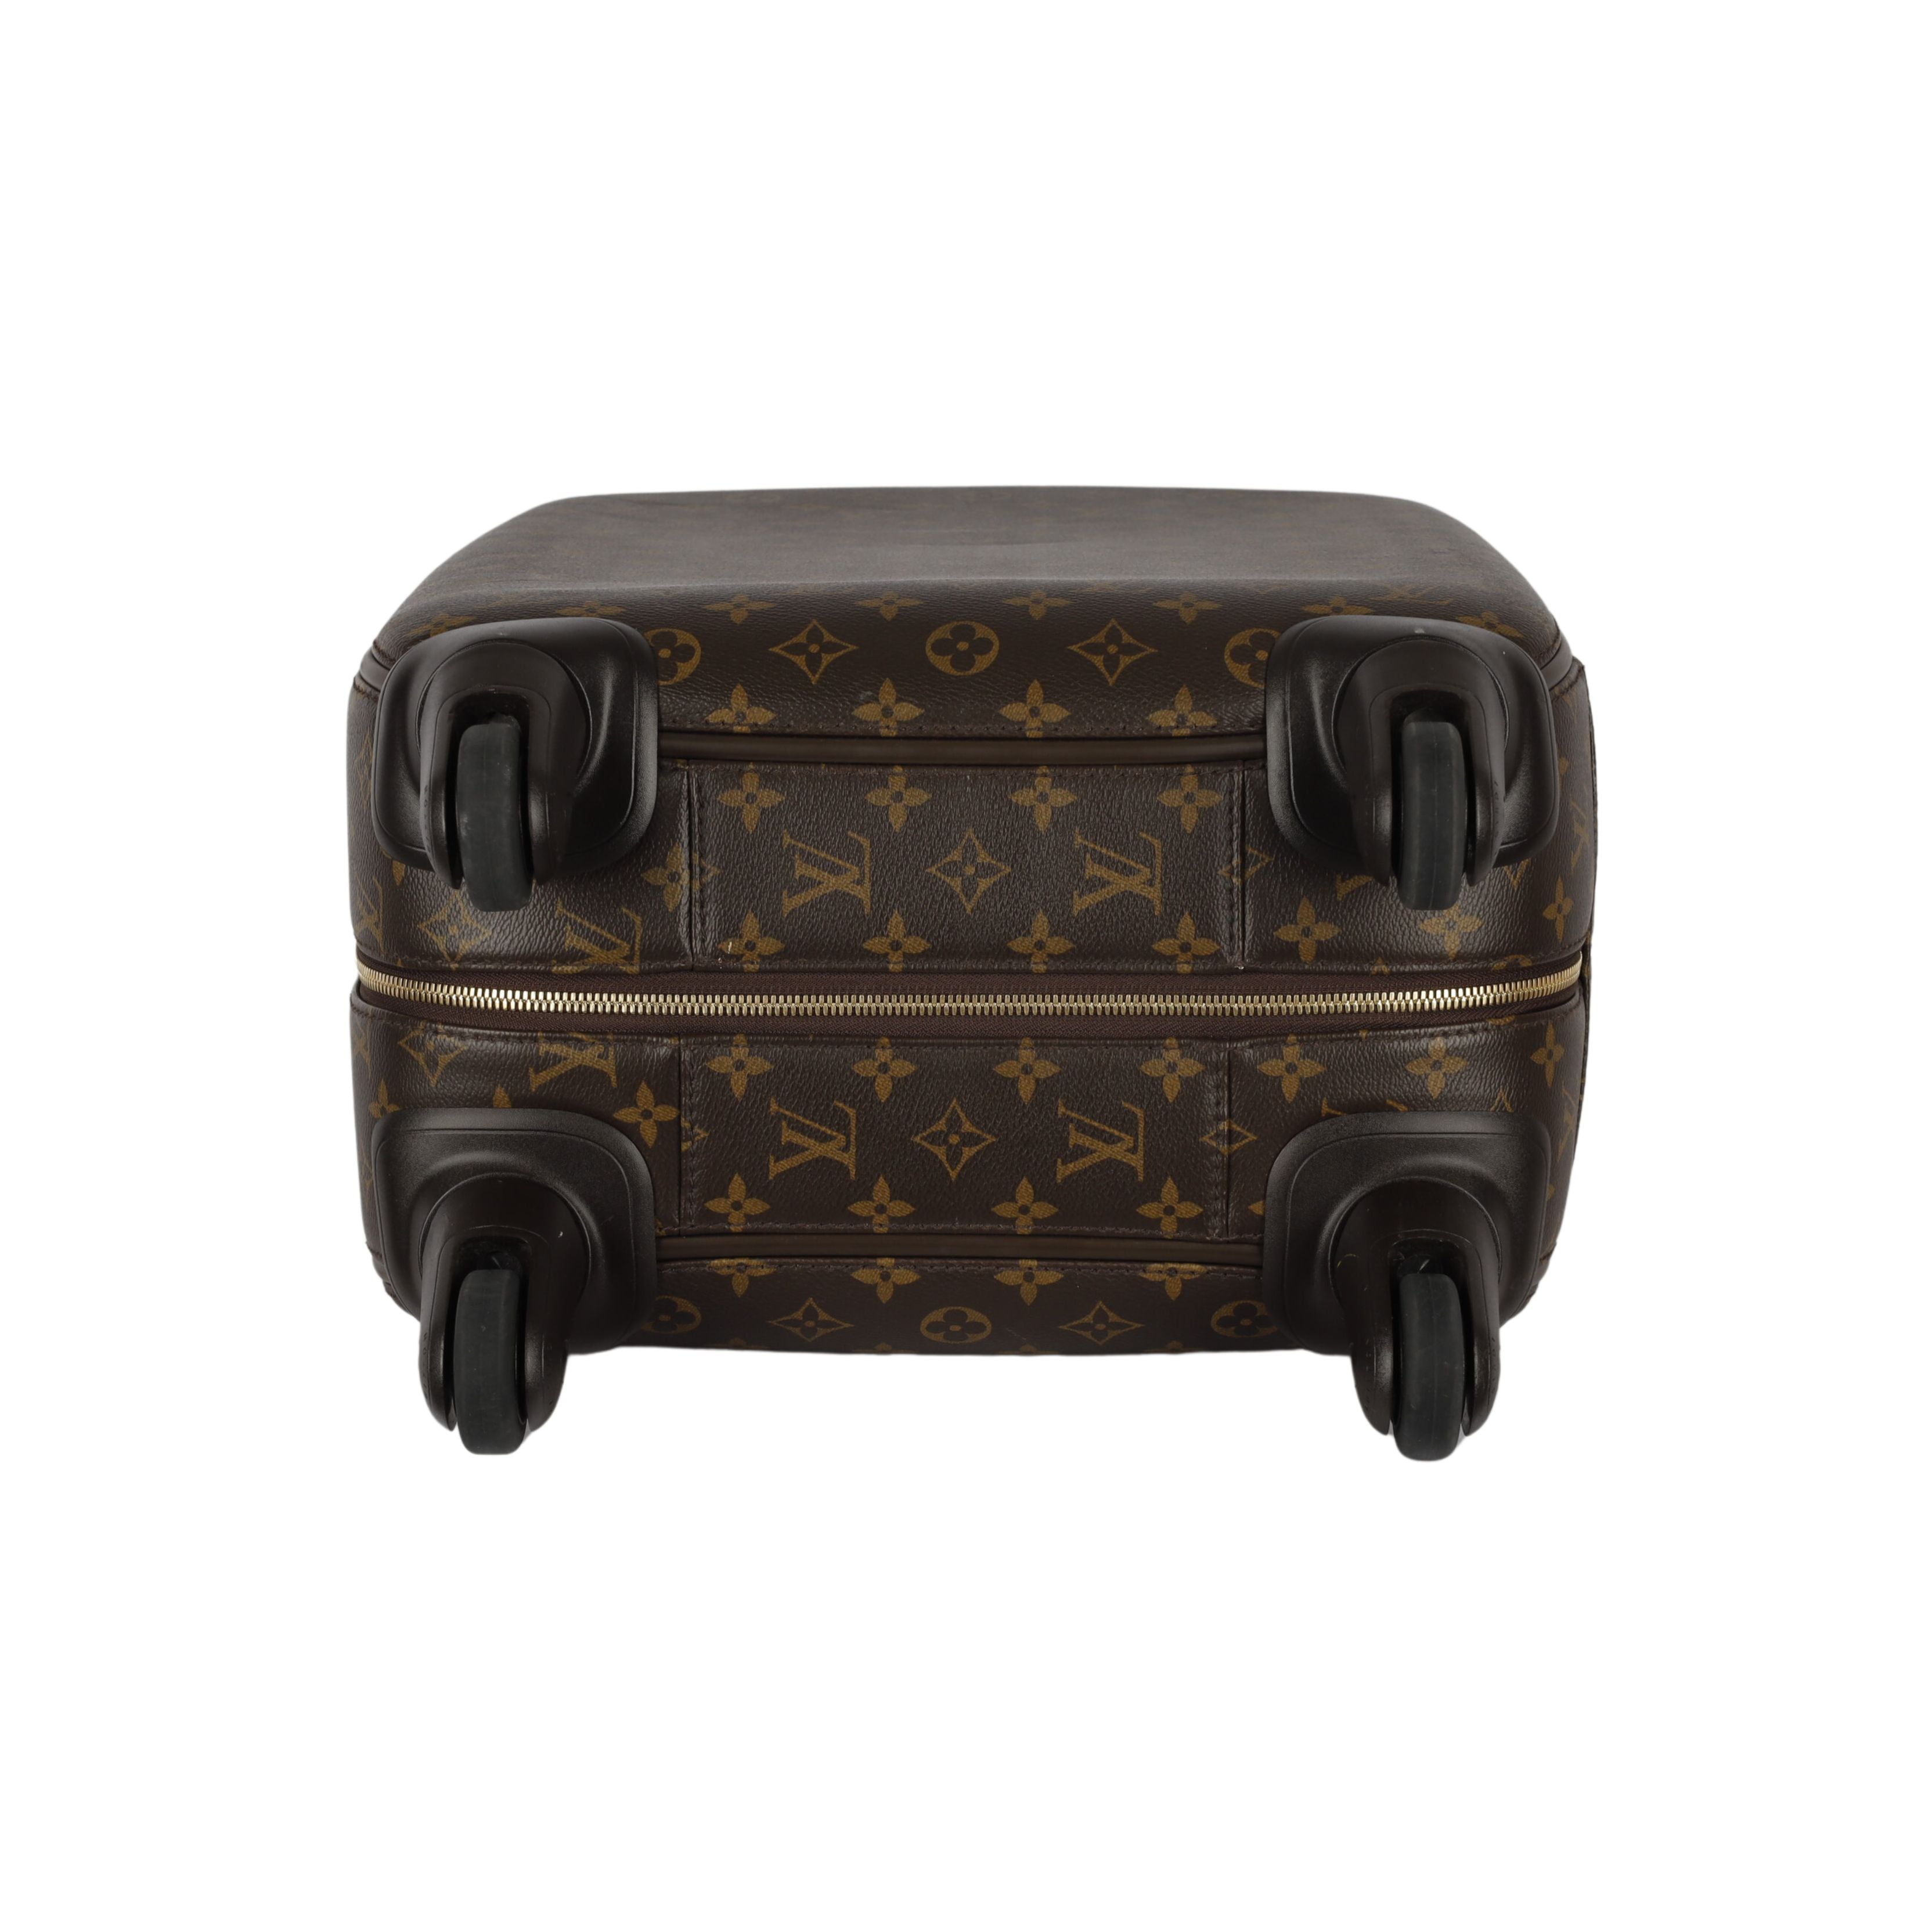 Louis Vuitton Monogram Zephyr 55 Luggage - '10s